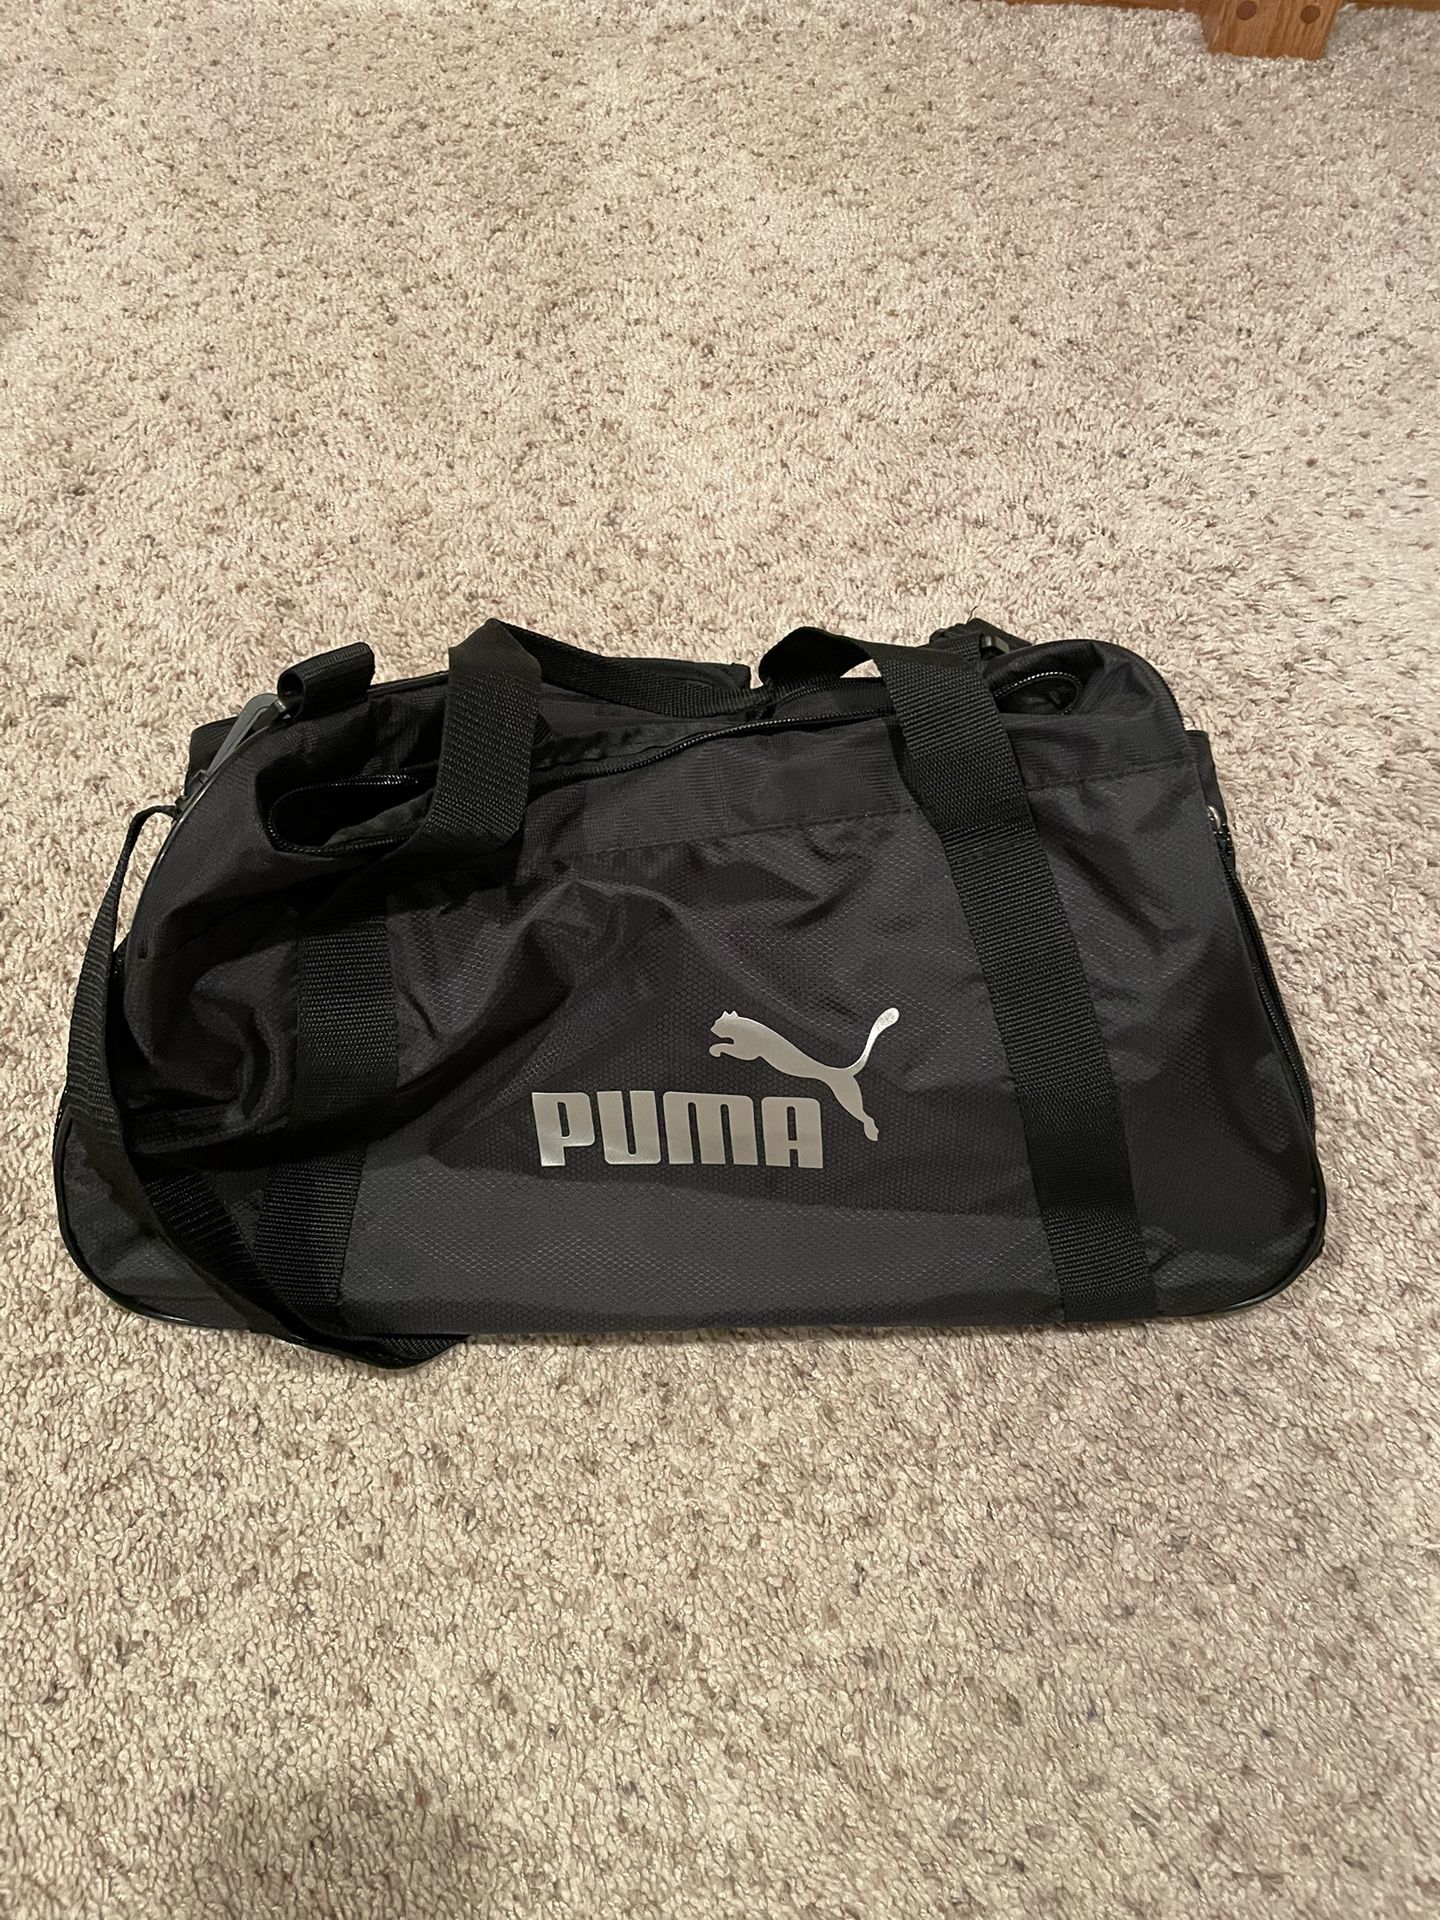 Puma Black Duffel Bag